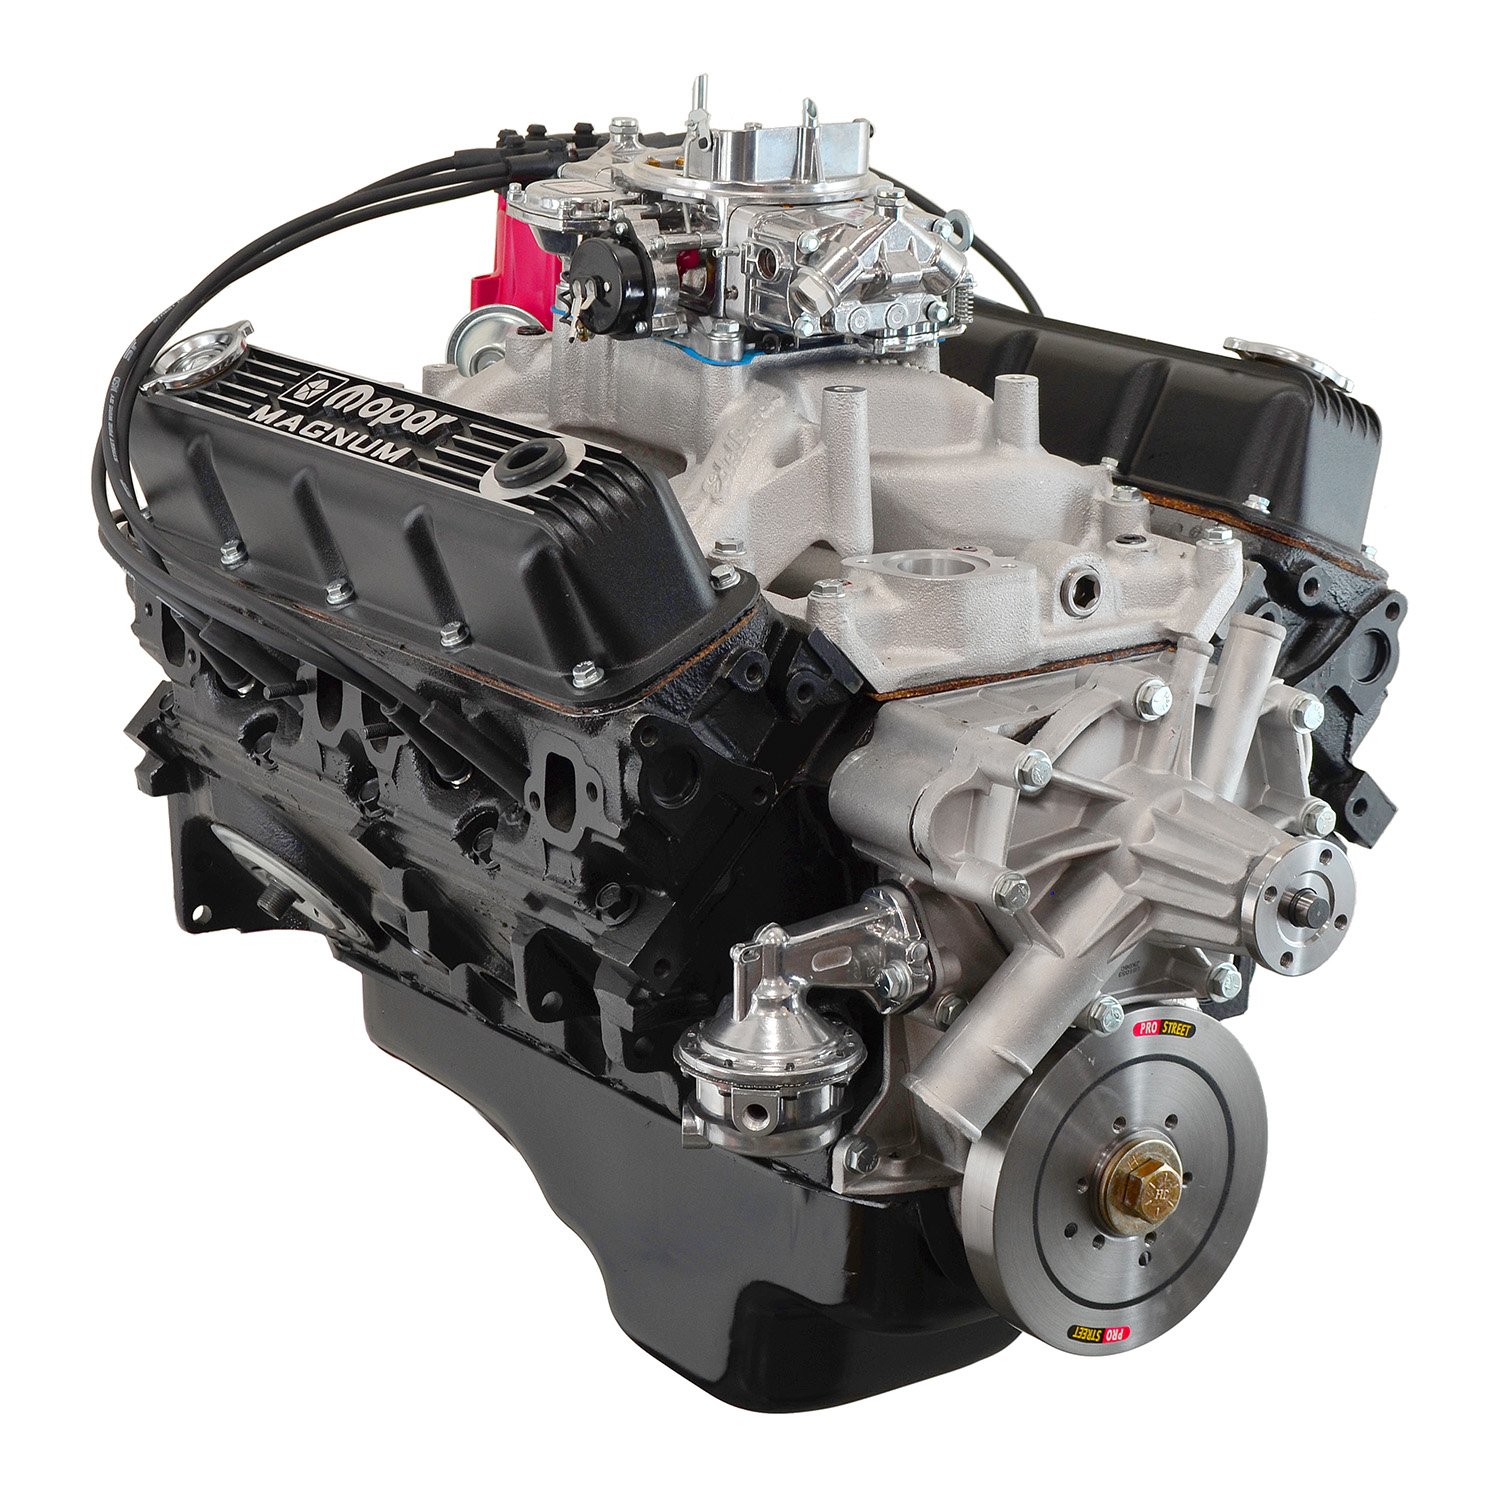 HP73C High Performance Crate Engine Small Block Chrysler 360ci / 320HP / 410TQ